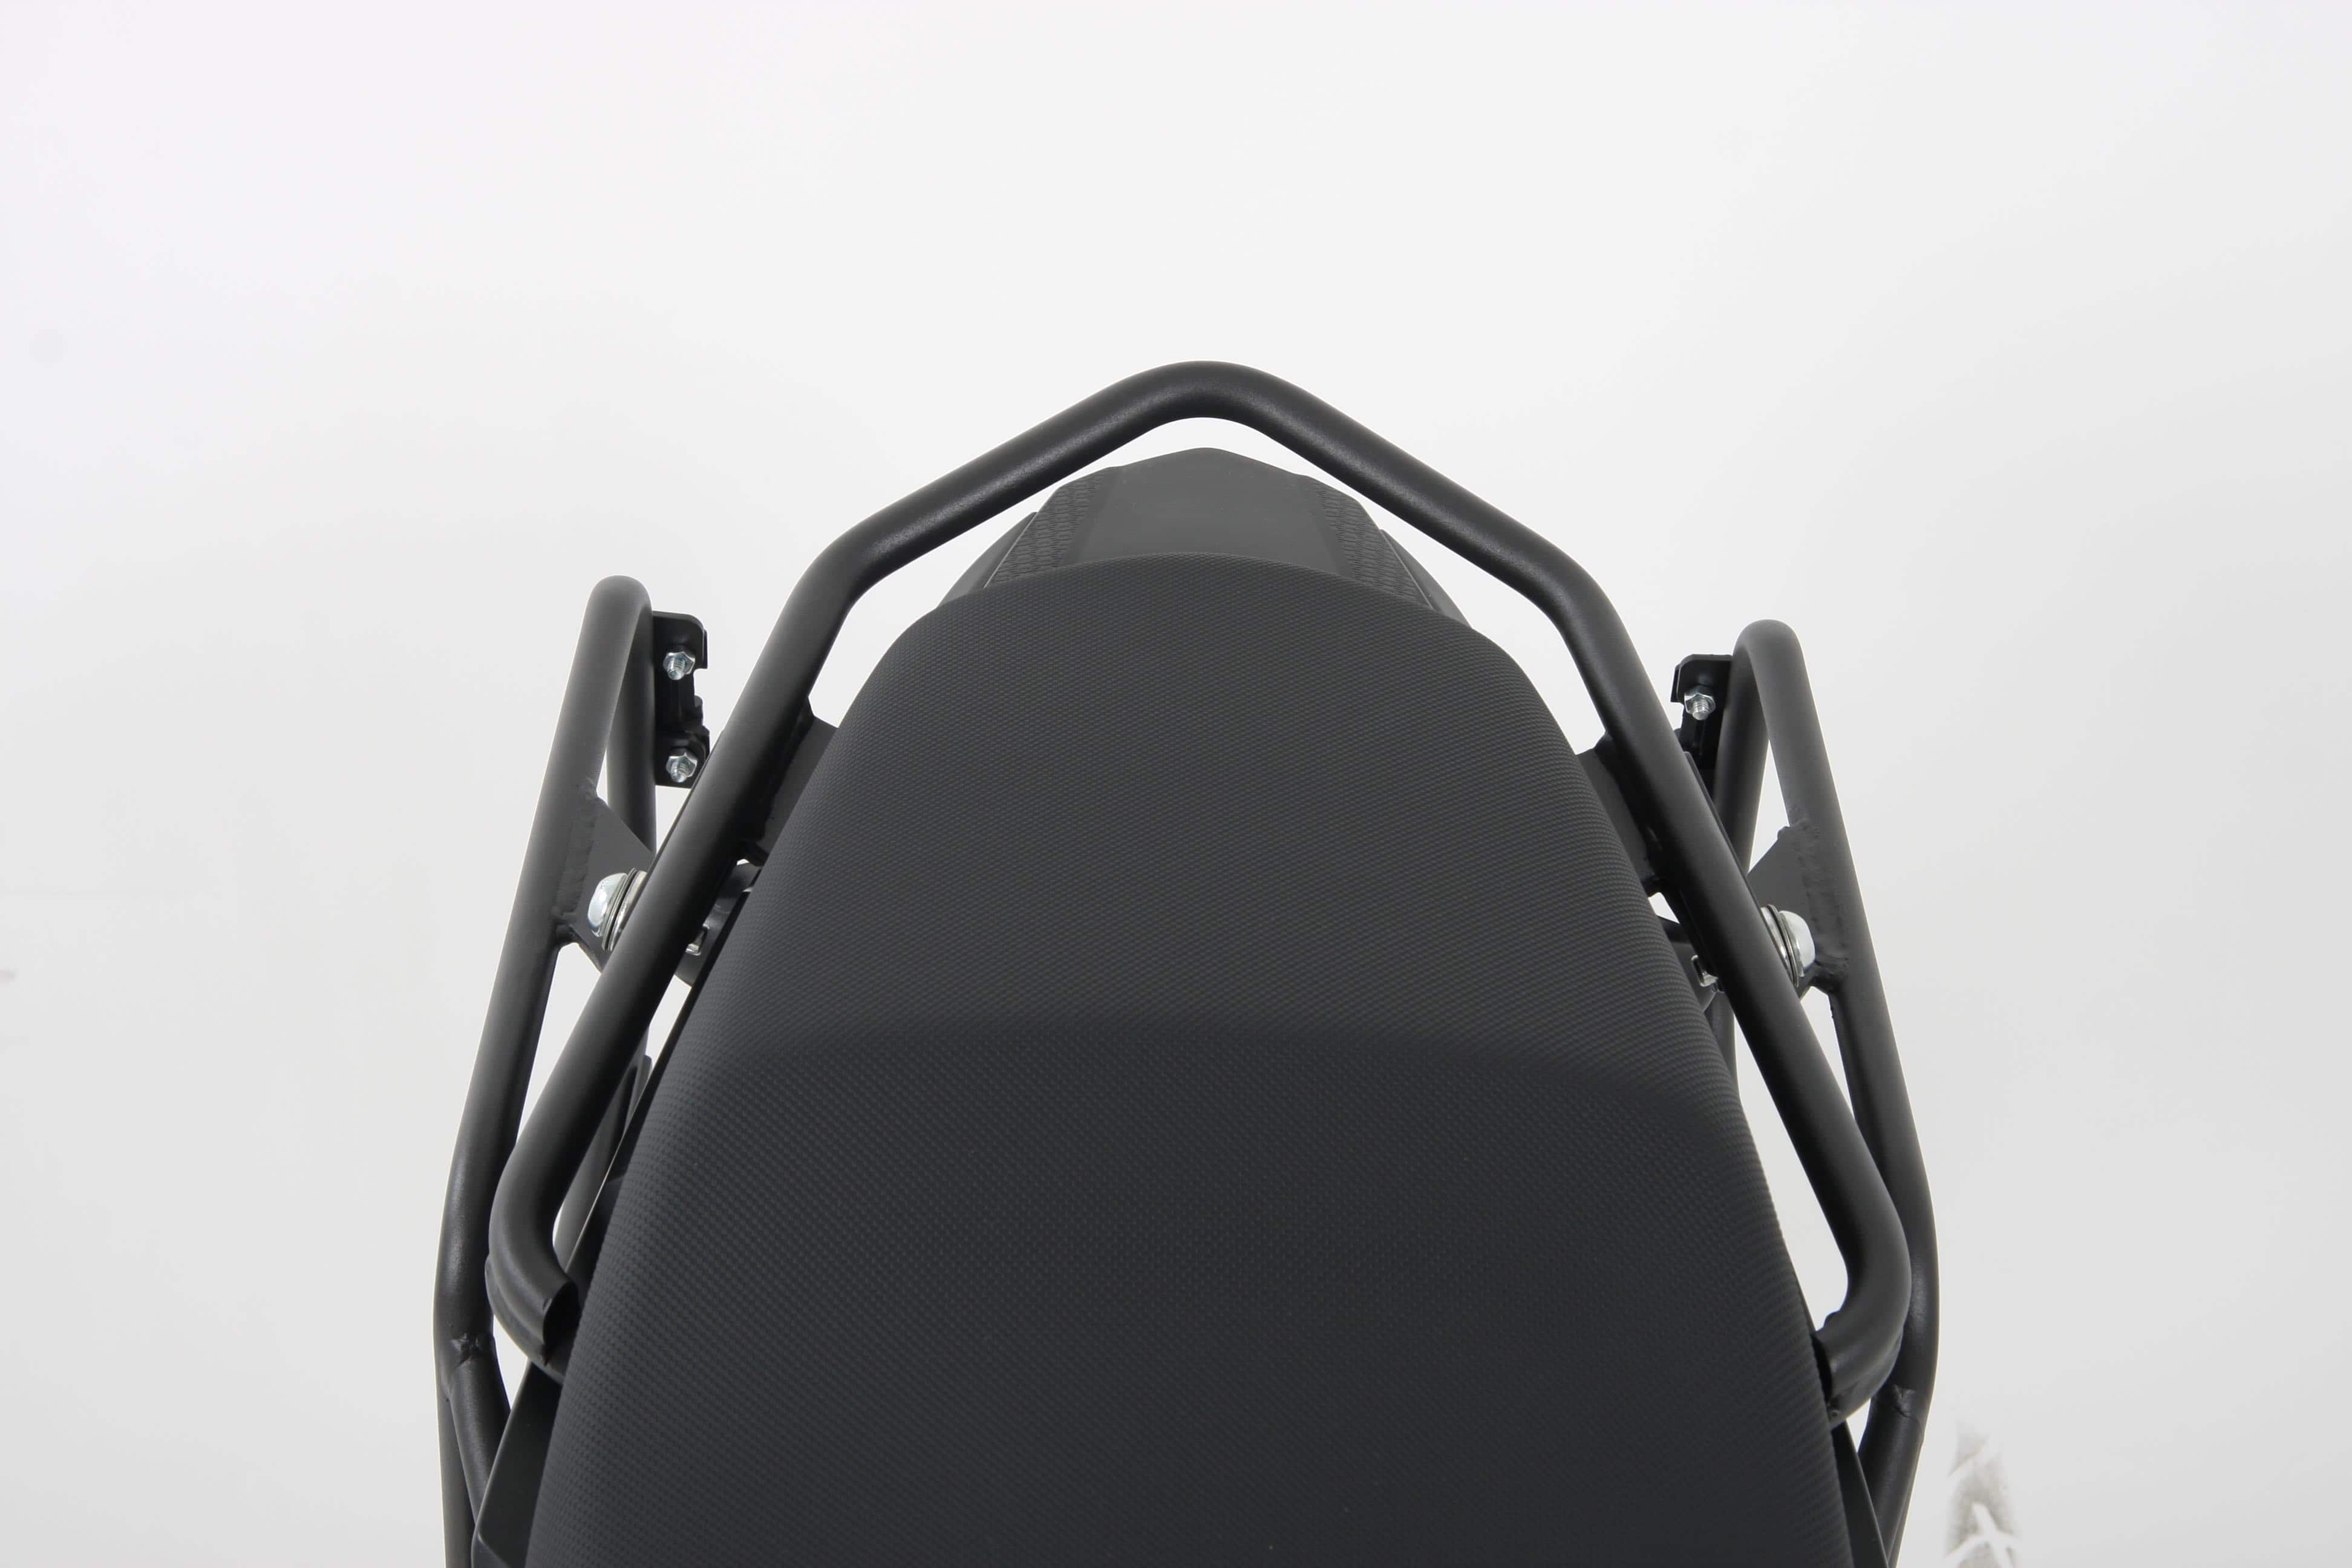 Pillion seat grab anthracite for Honda CB 500 X (2013-2016)